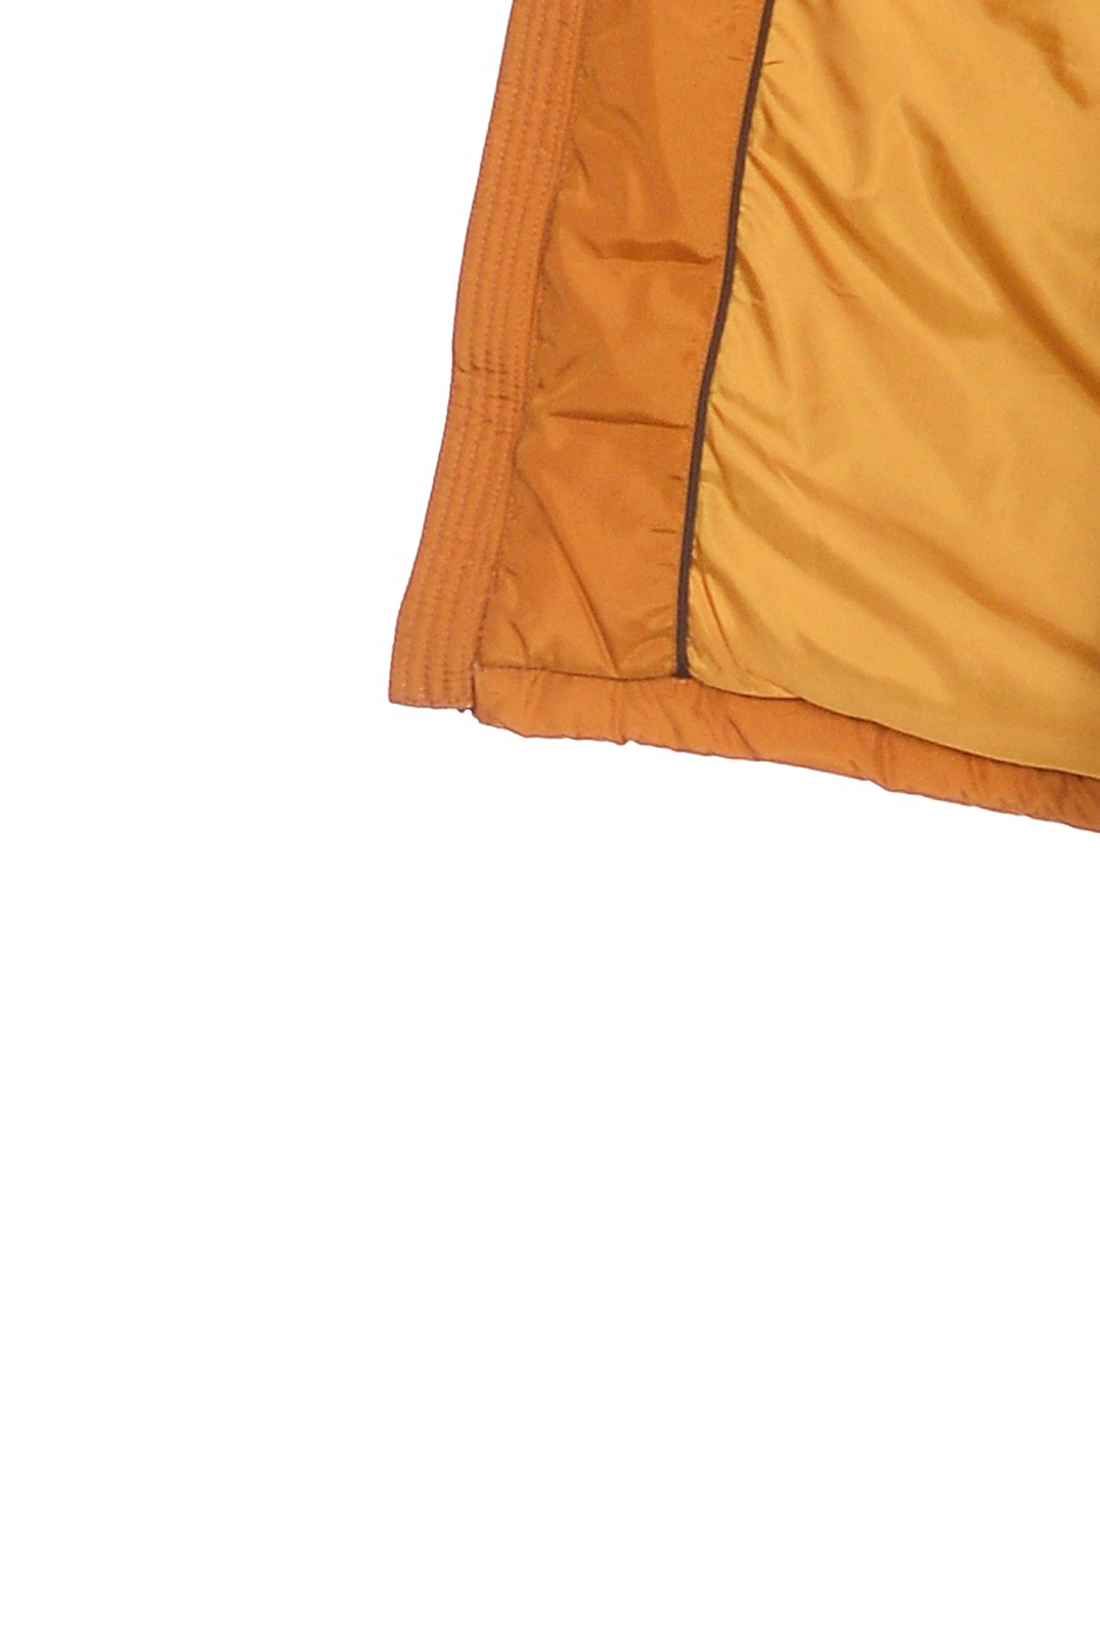 Пуховик в спортивном стиле (арт. baon B508501), размер 3XL, цвет желтый Пуховик в спортивном стиле (арт. baon B508501) - фото 4